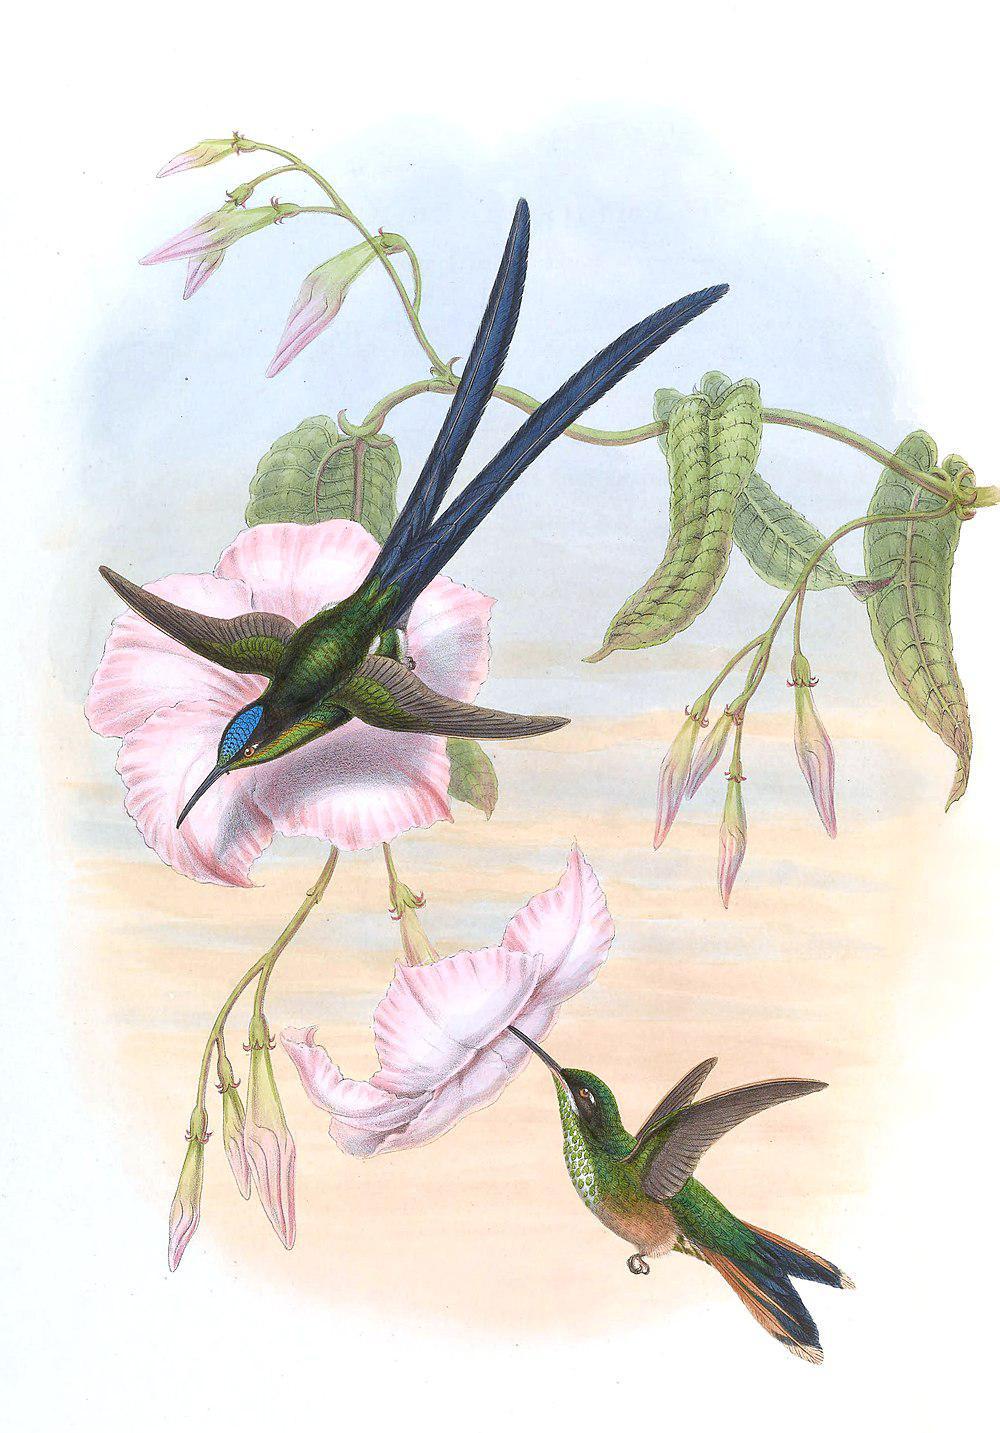 剪尾蜂鸟 / Scissor-tailed Hummingbird / Hylonympha macrocerca